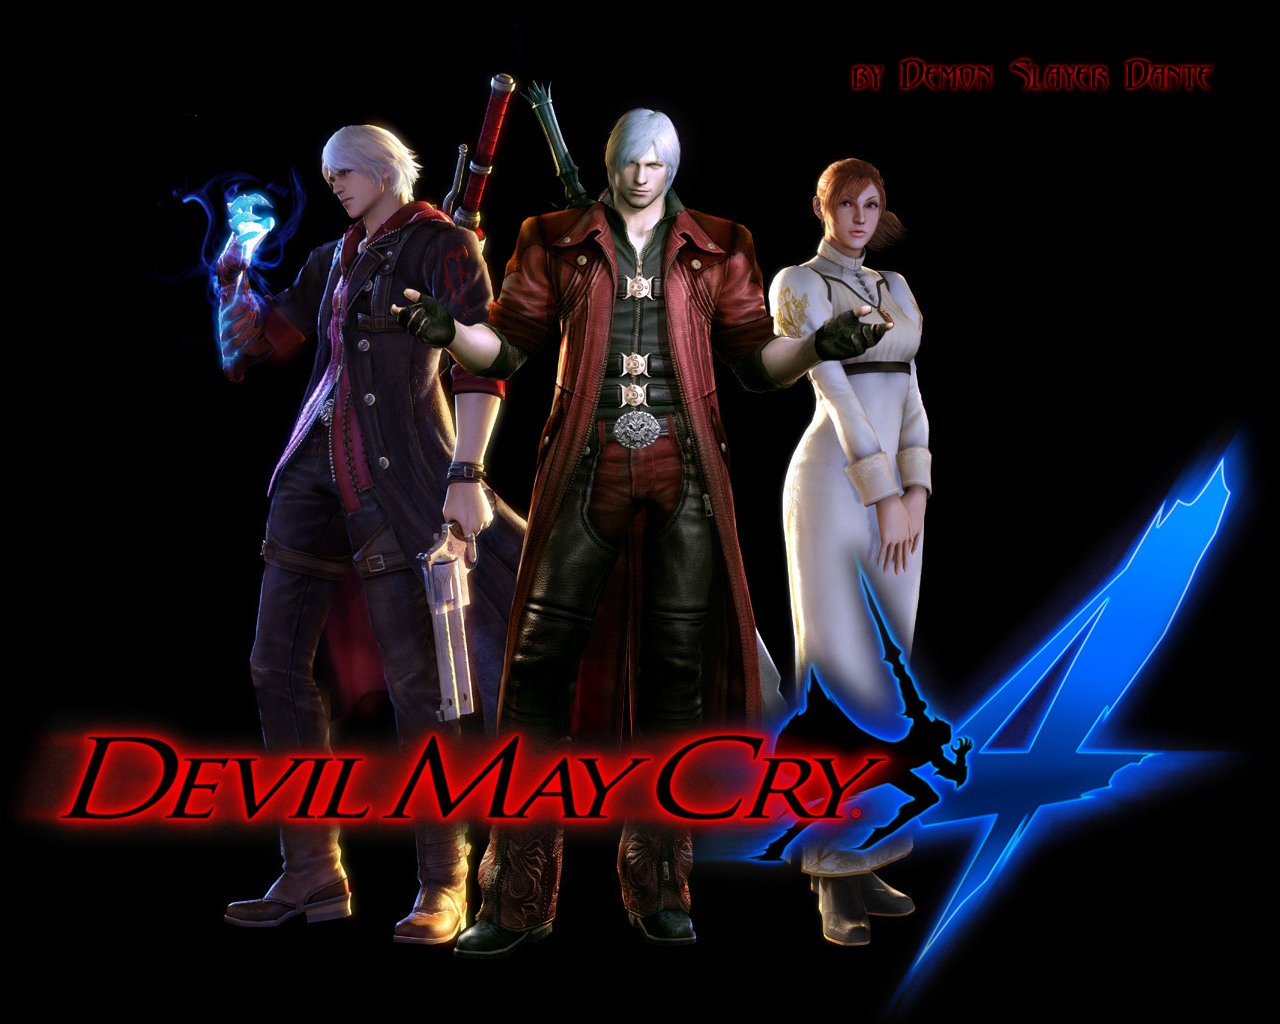 Tapeta Dante Devil May Cry Devil May Cry 4 Gry wideo gra wideo komputerowa